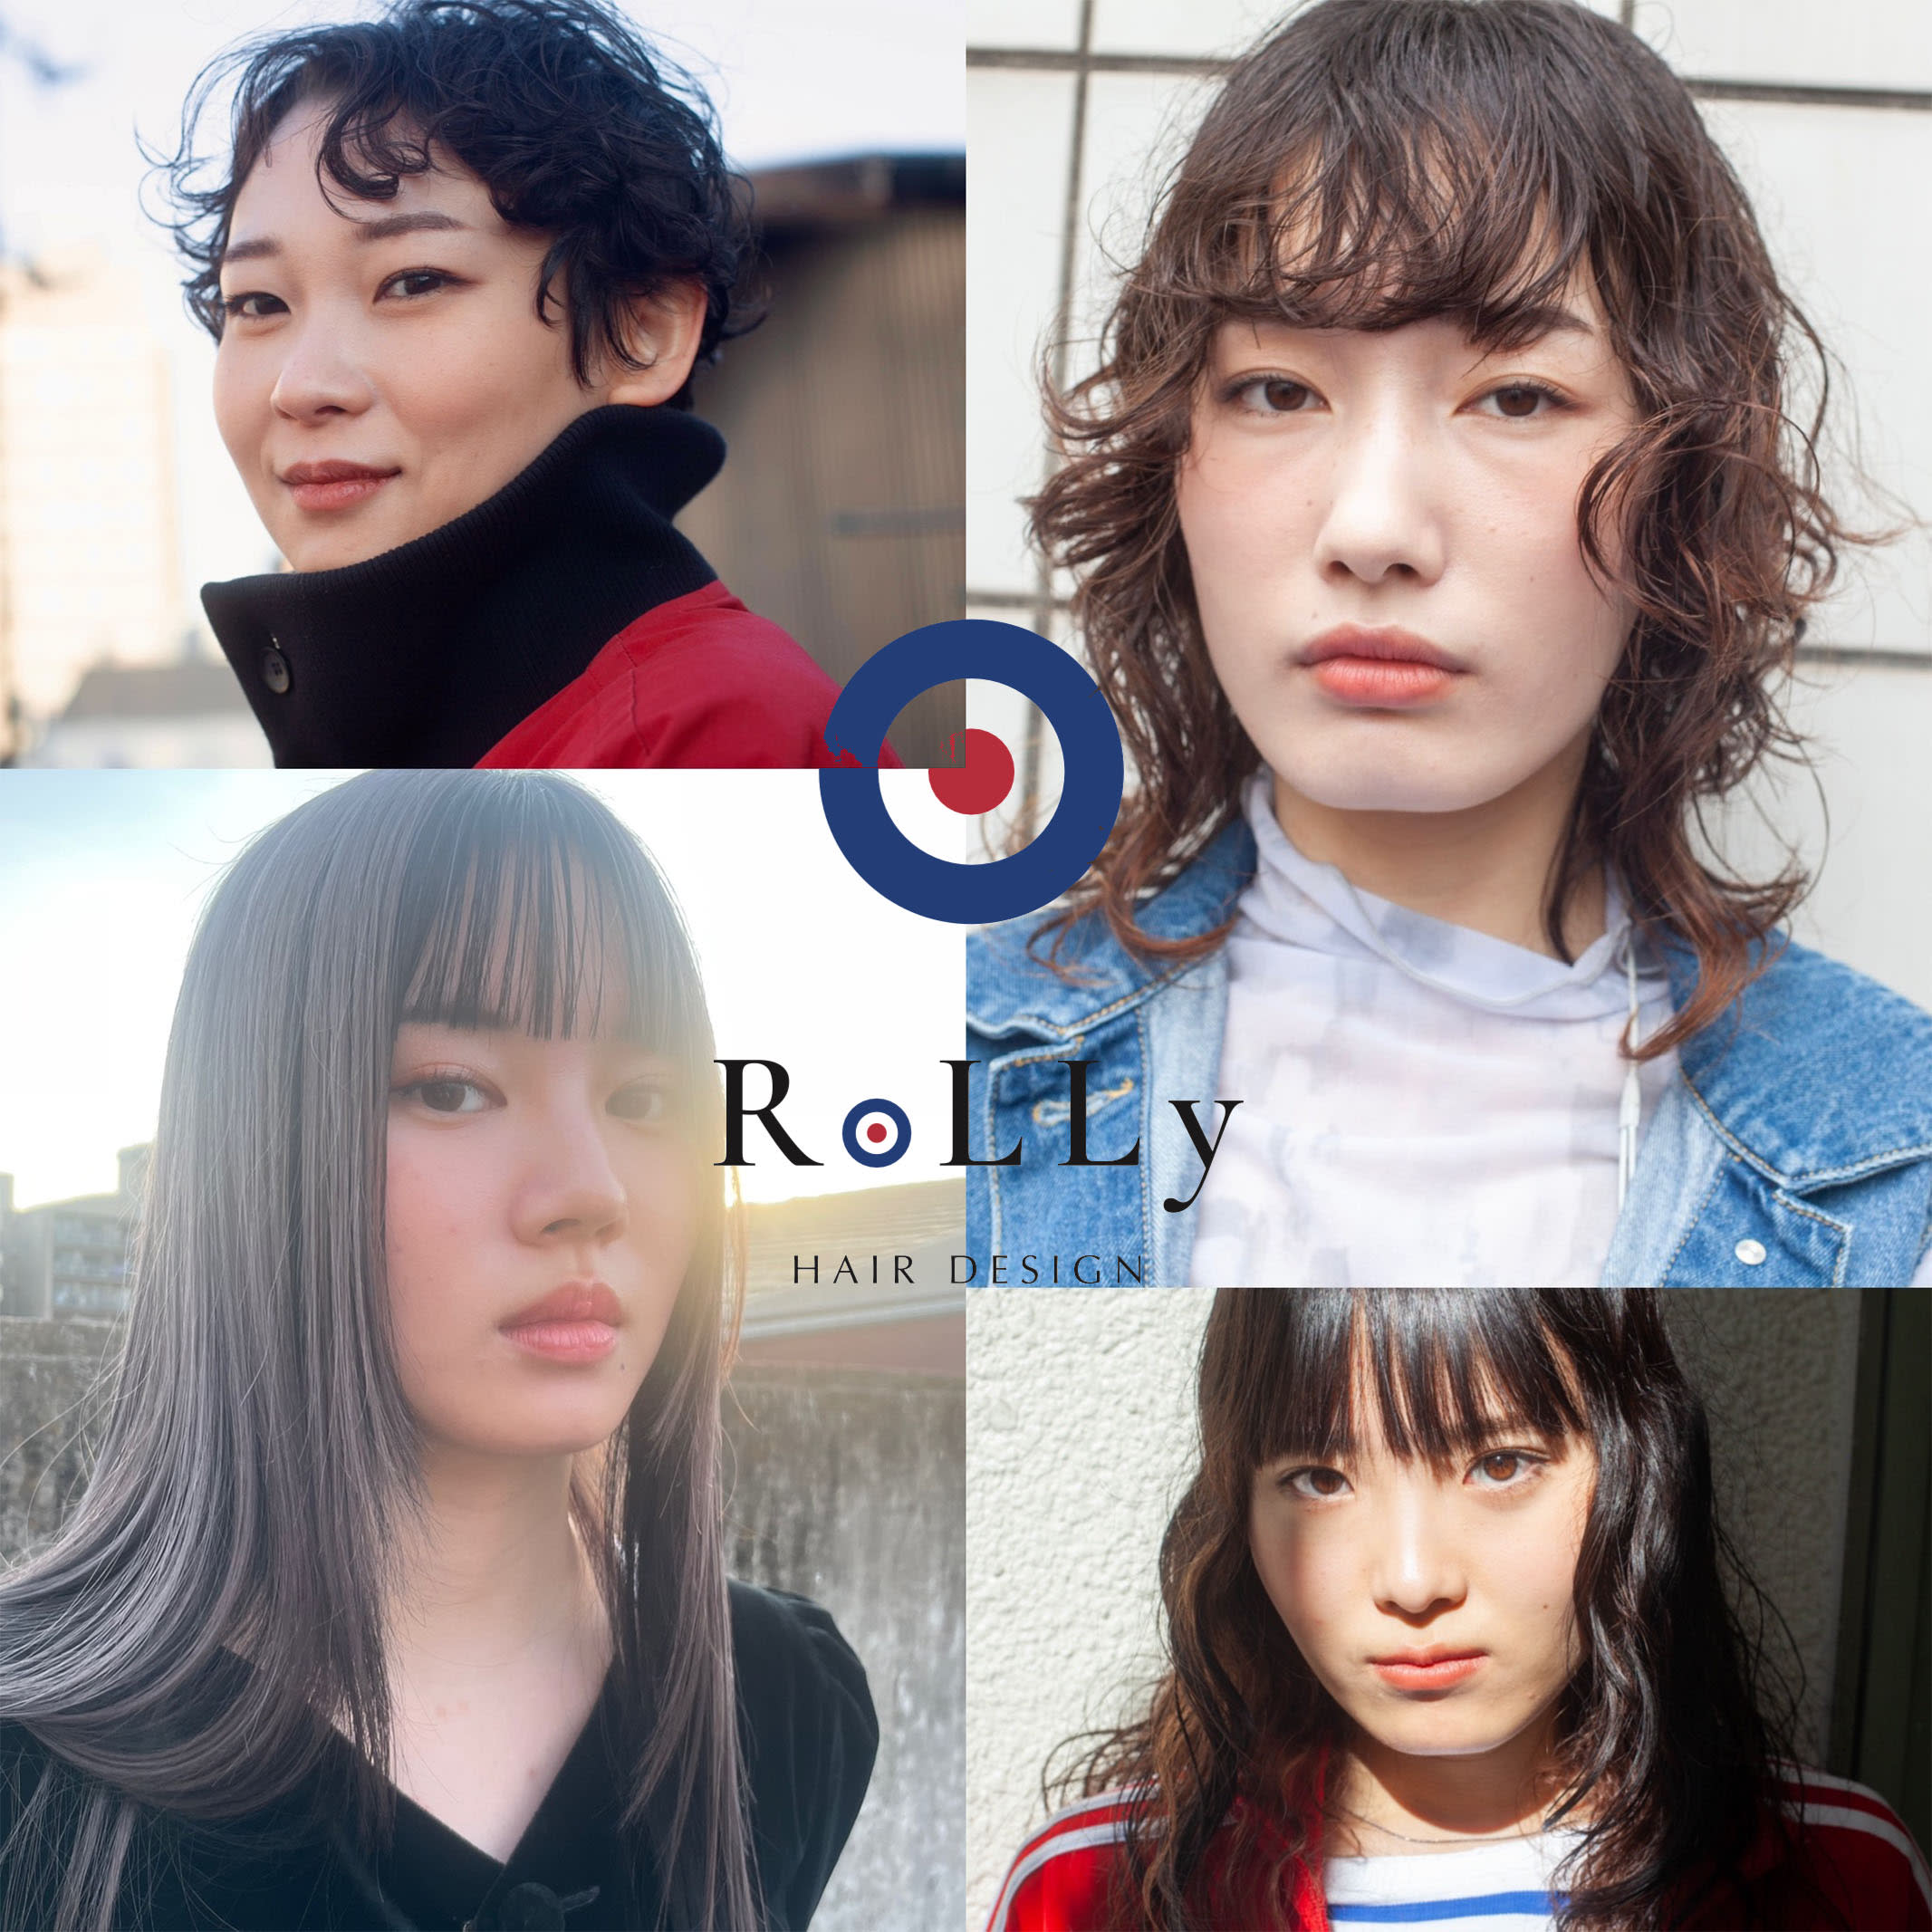 RoLLy hair design hiroshimaのアイキャッチ画像